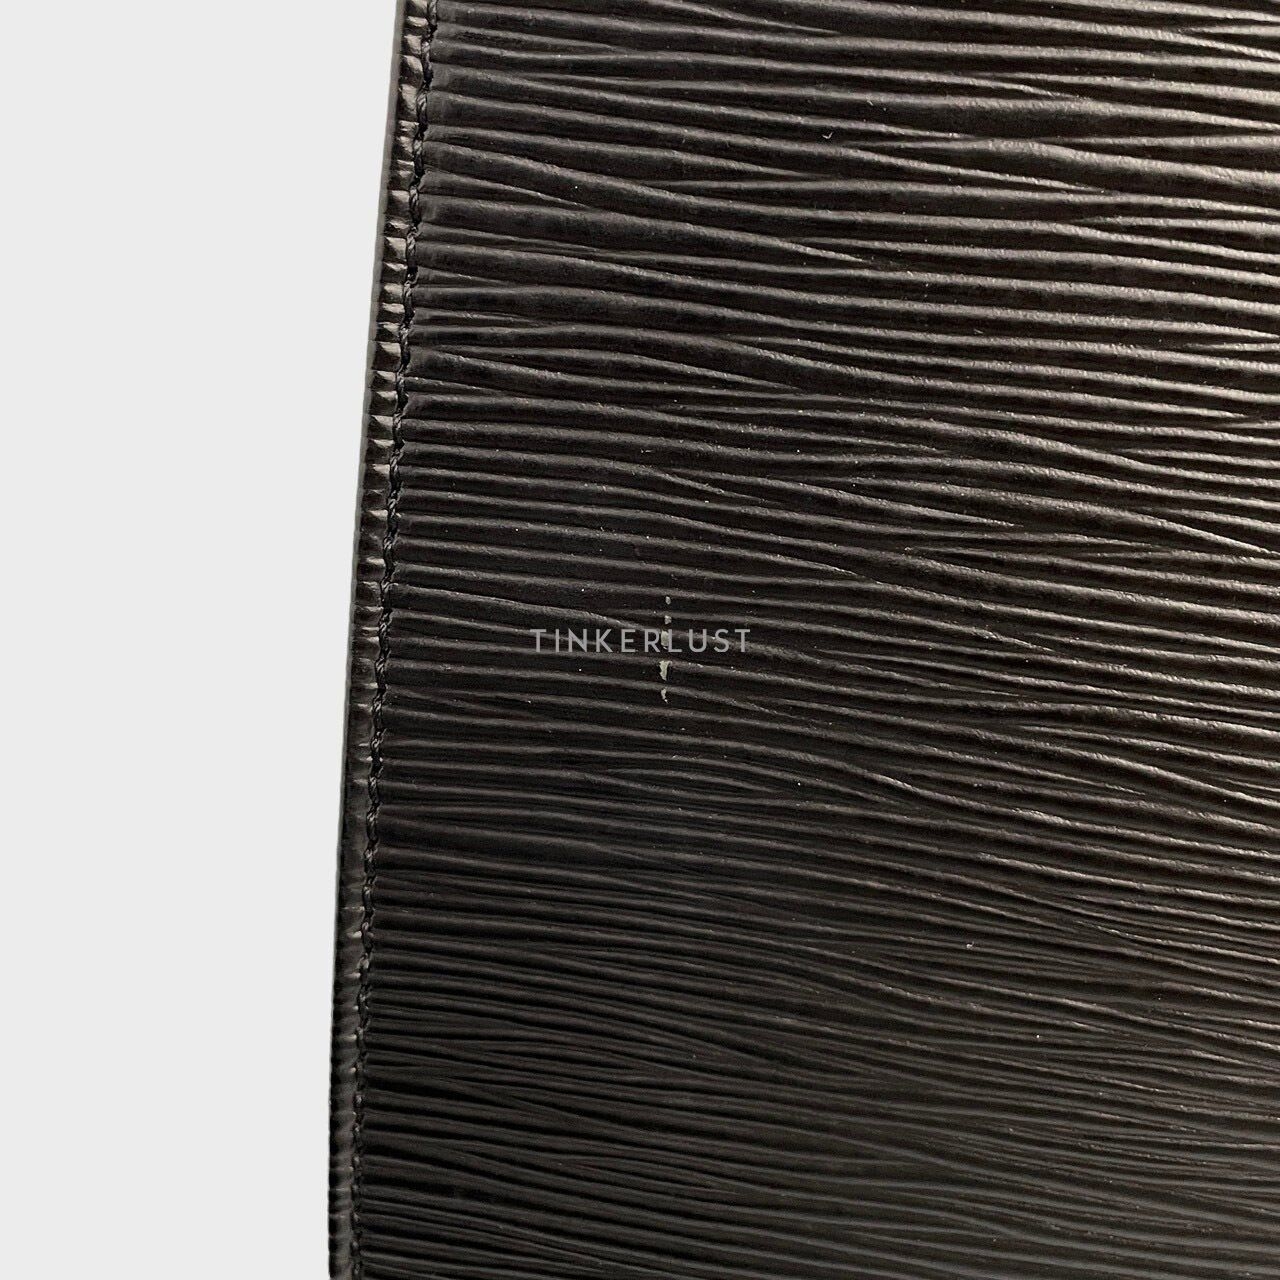 Louis Vuitton Black Epi Leather Handbag 2003